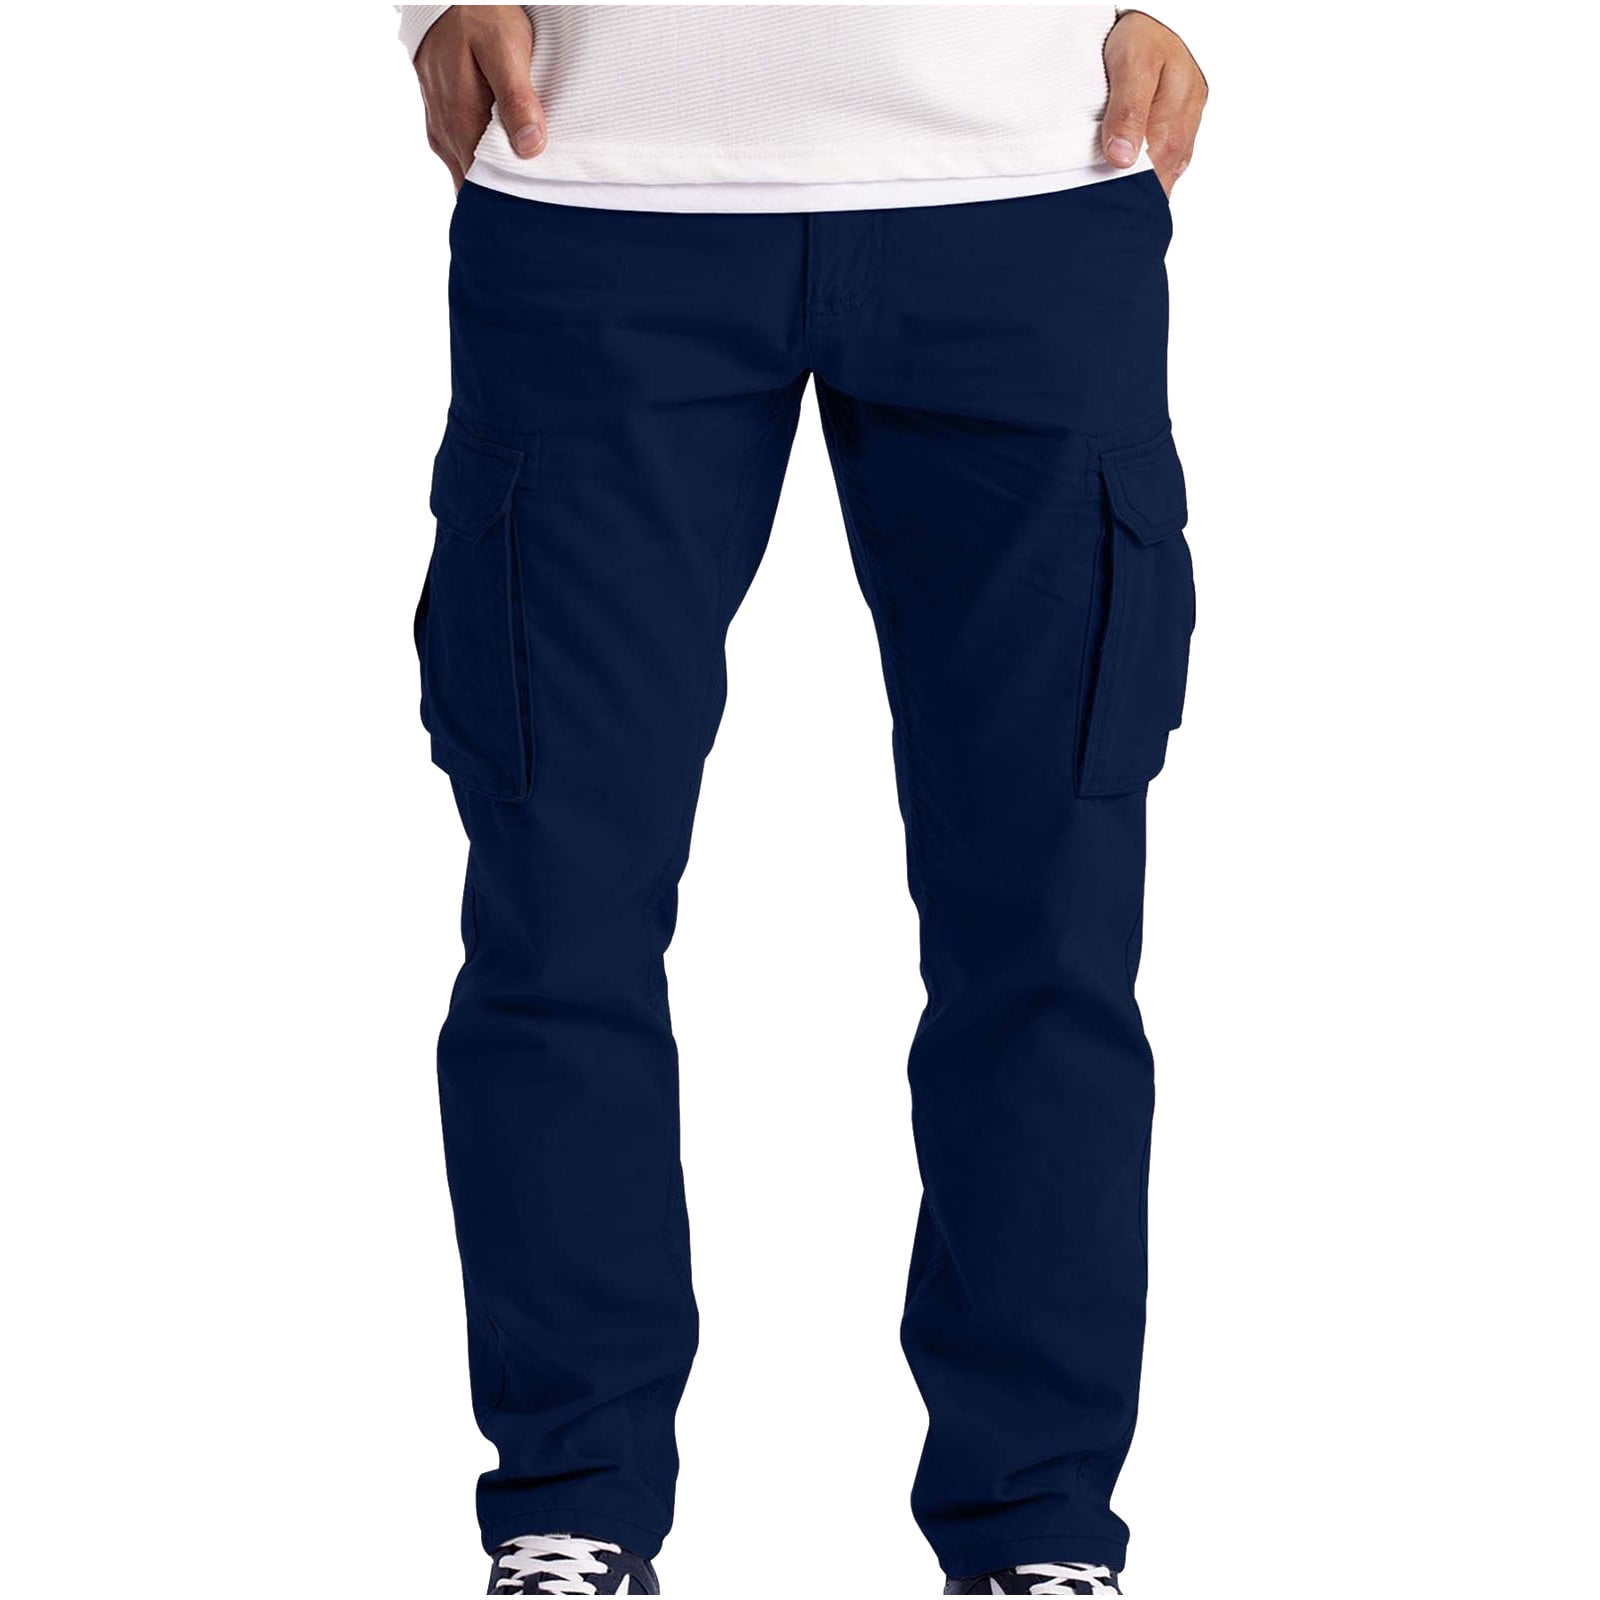 NyCo Ripstop Civilian Protective Uniform Trousers Tactical Cargo Pants,  Khaki